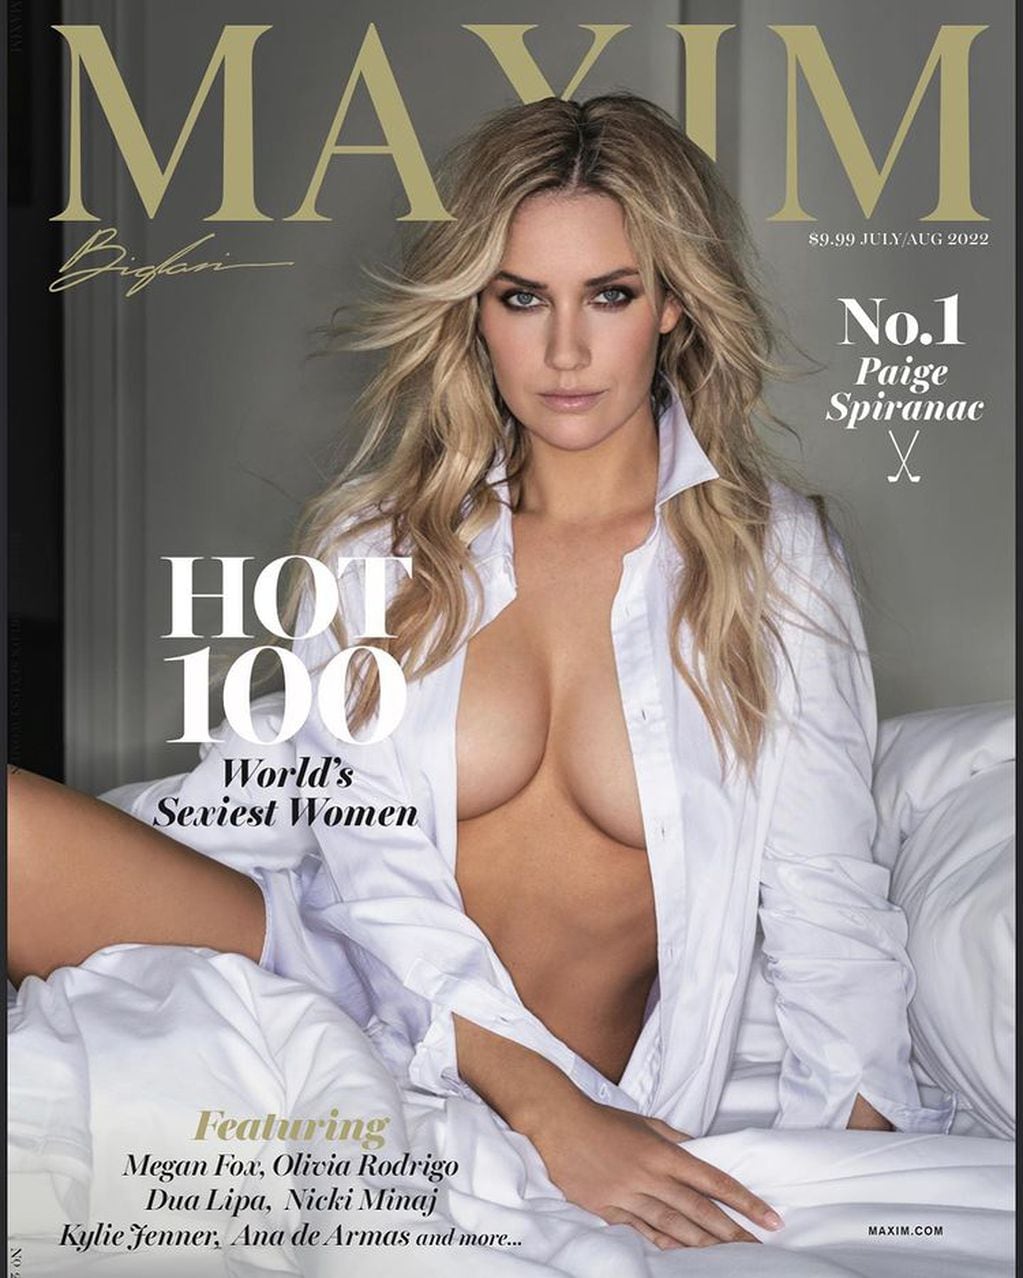 La portada que Paige Spiranac protagonizó para la revista Maxim.